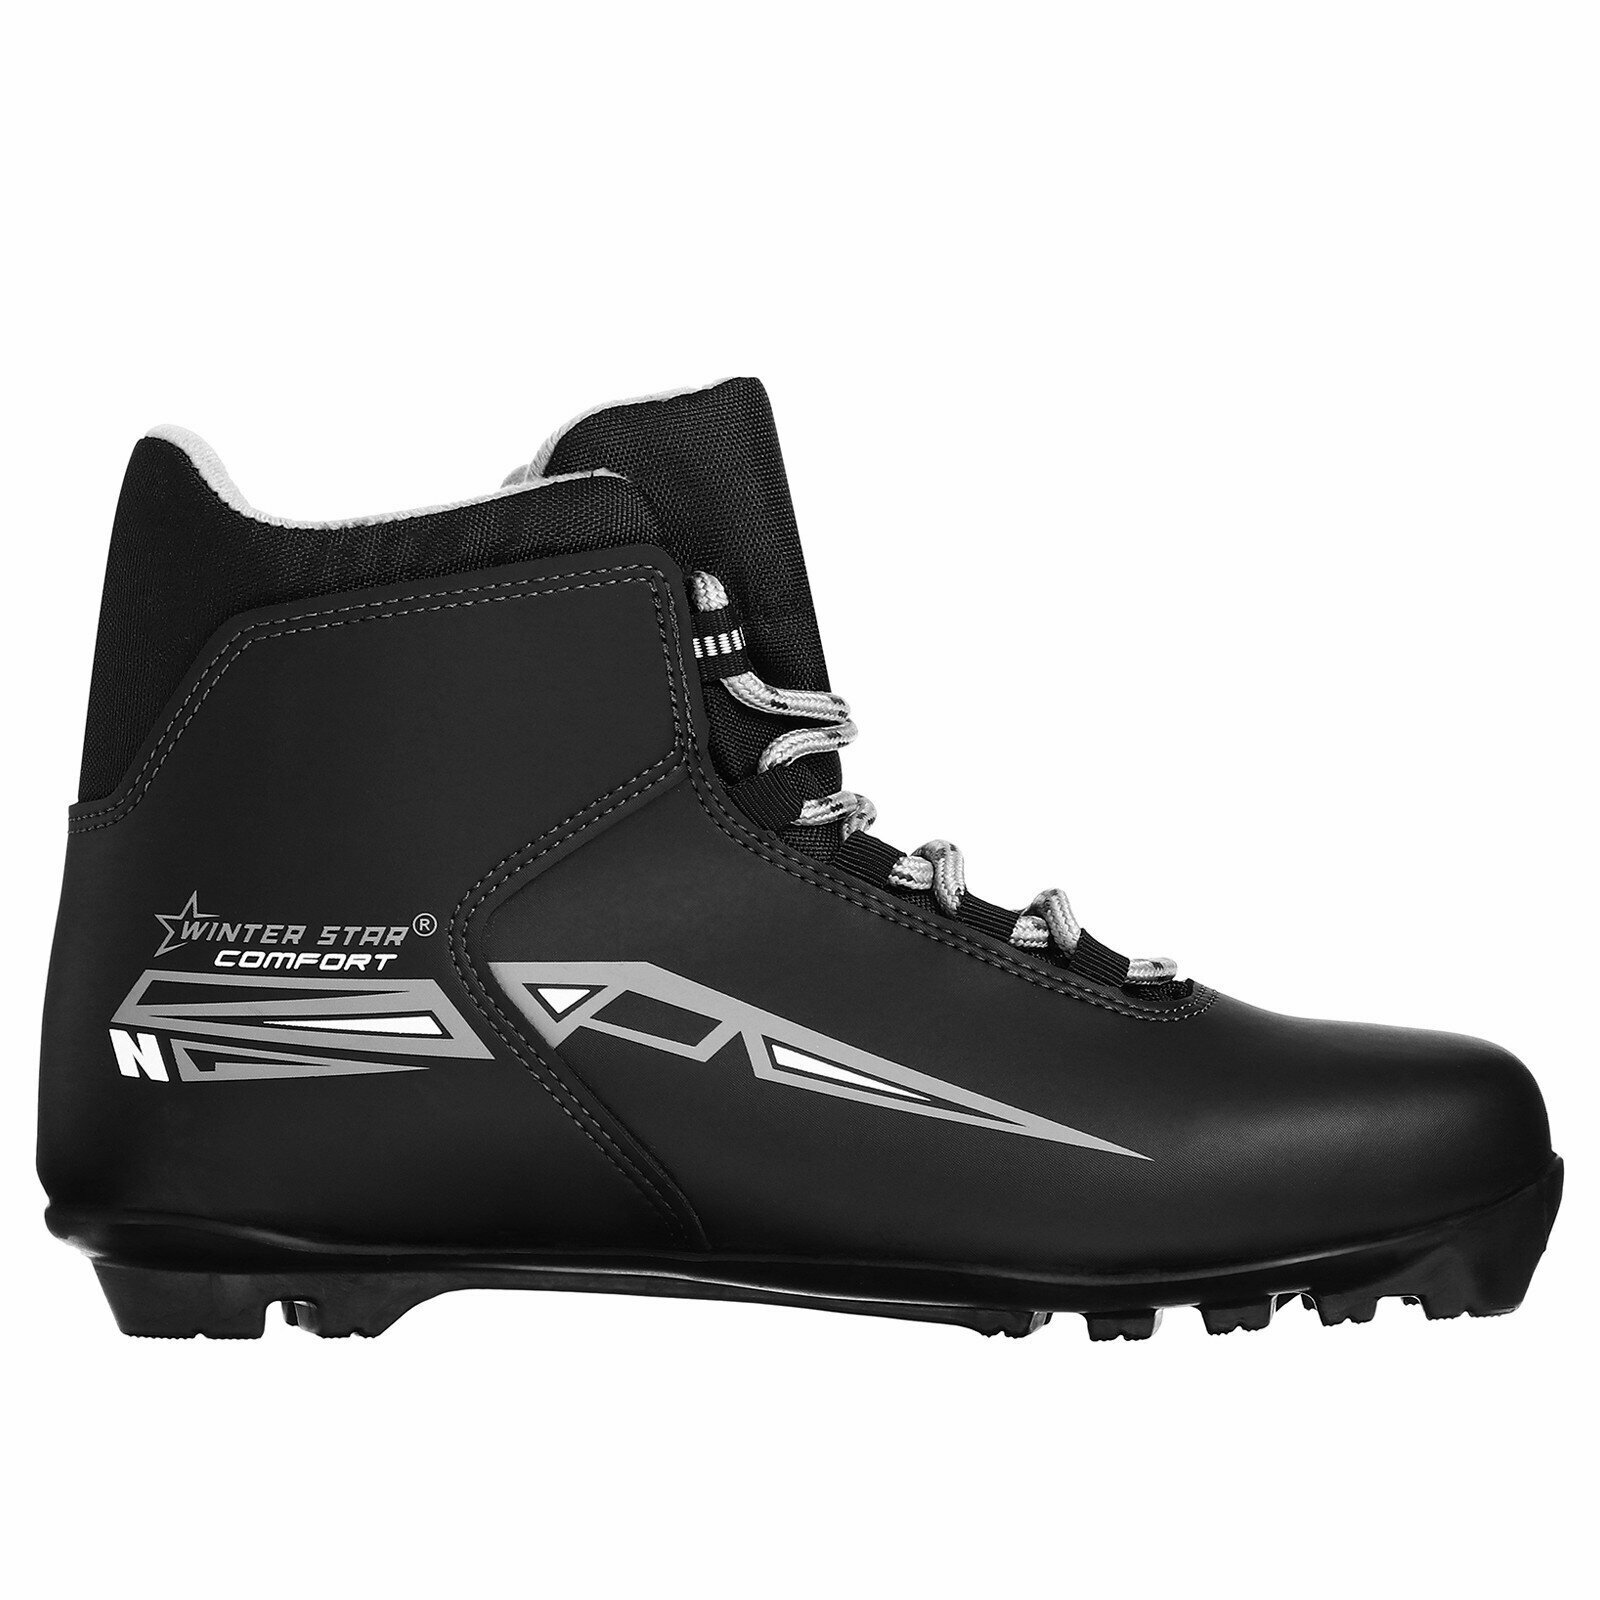 Ботинки лыжные Winter Star comfort, Nnn, р. 36, цвет чёрный, лого серый Winter Star 9796115